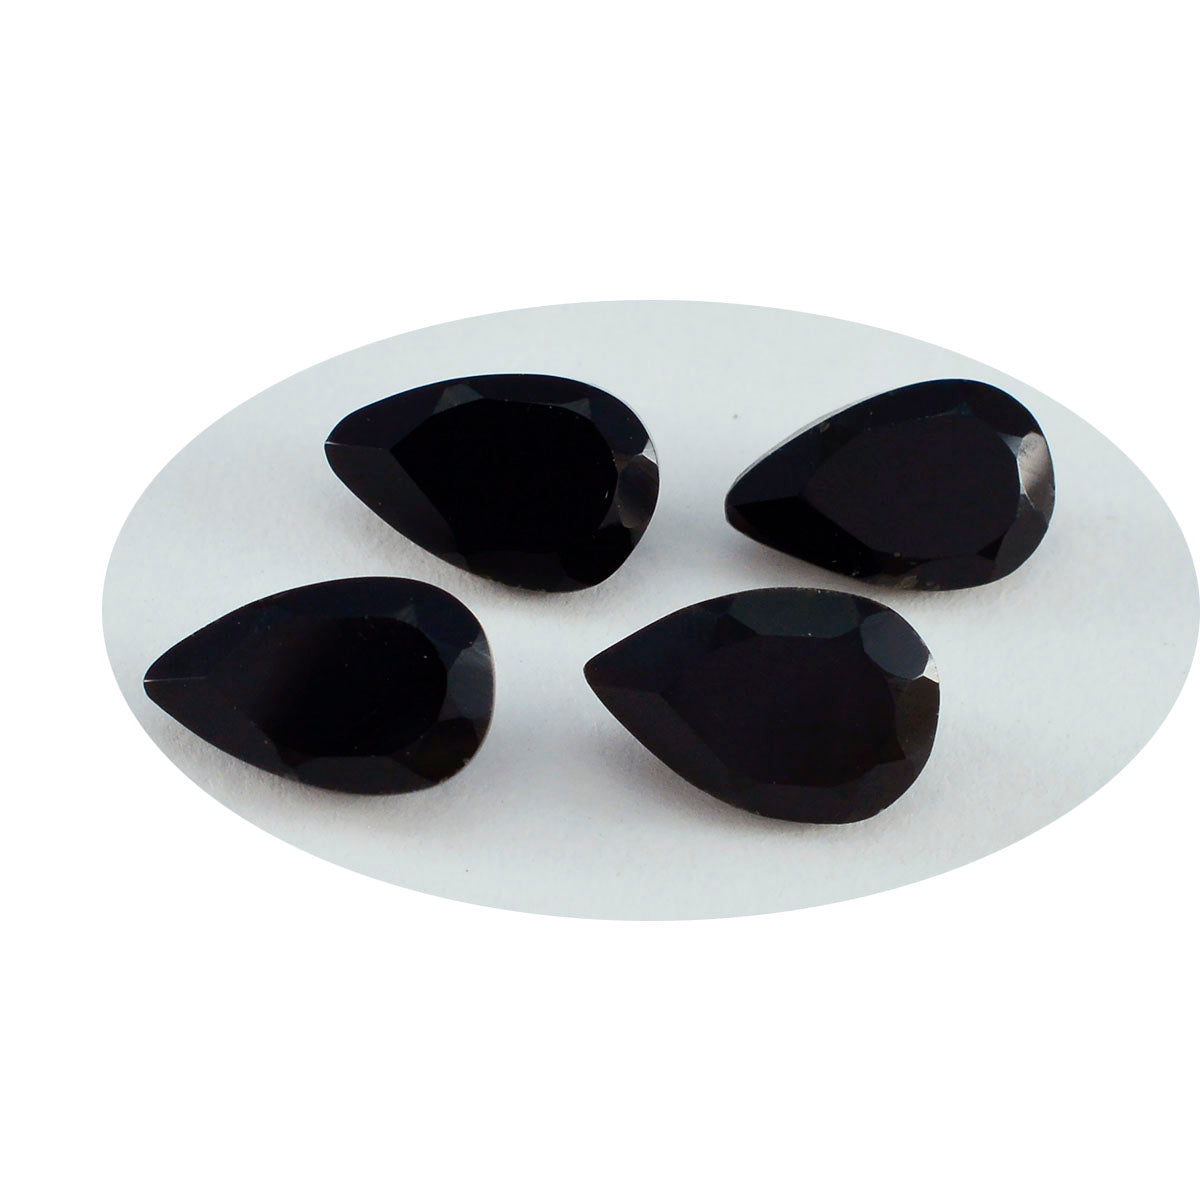 Riyogems 1PC Natural Black Onyx Faceted 7x10 mm Pear Shape AAA Quality Gems